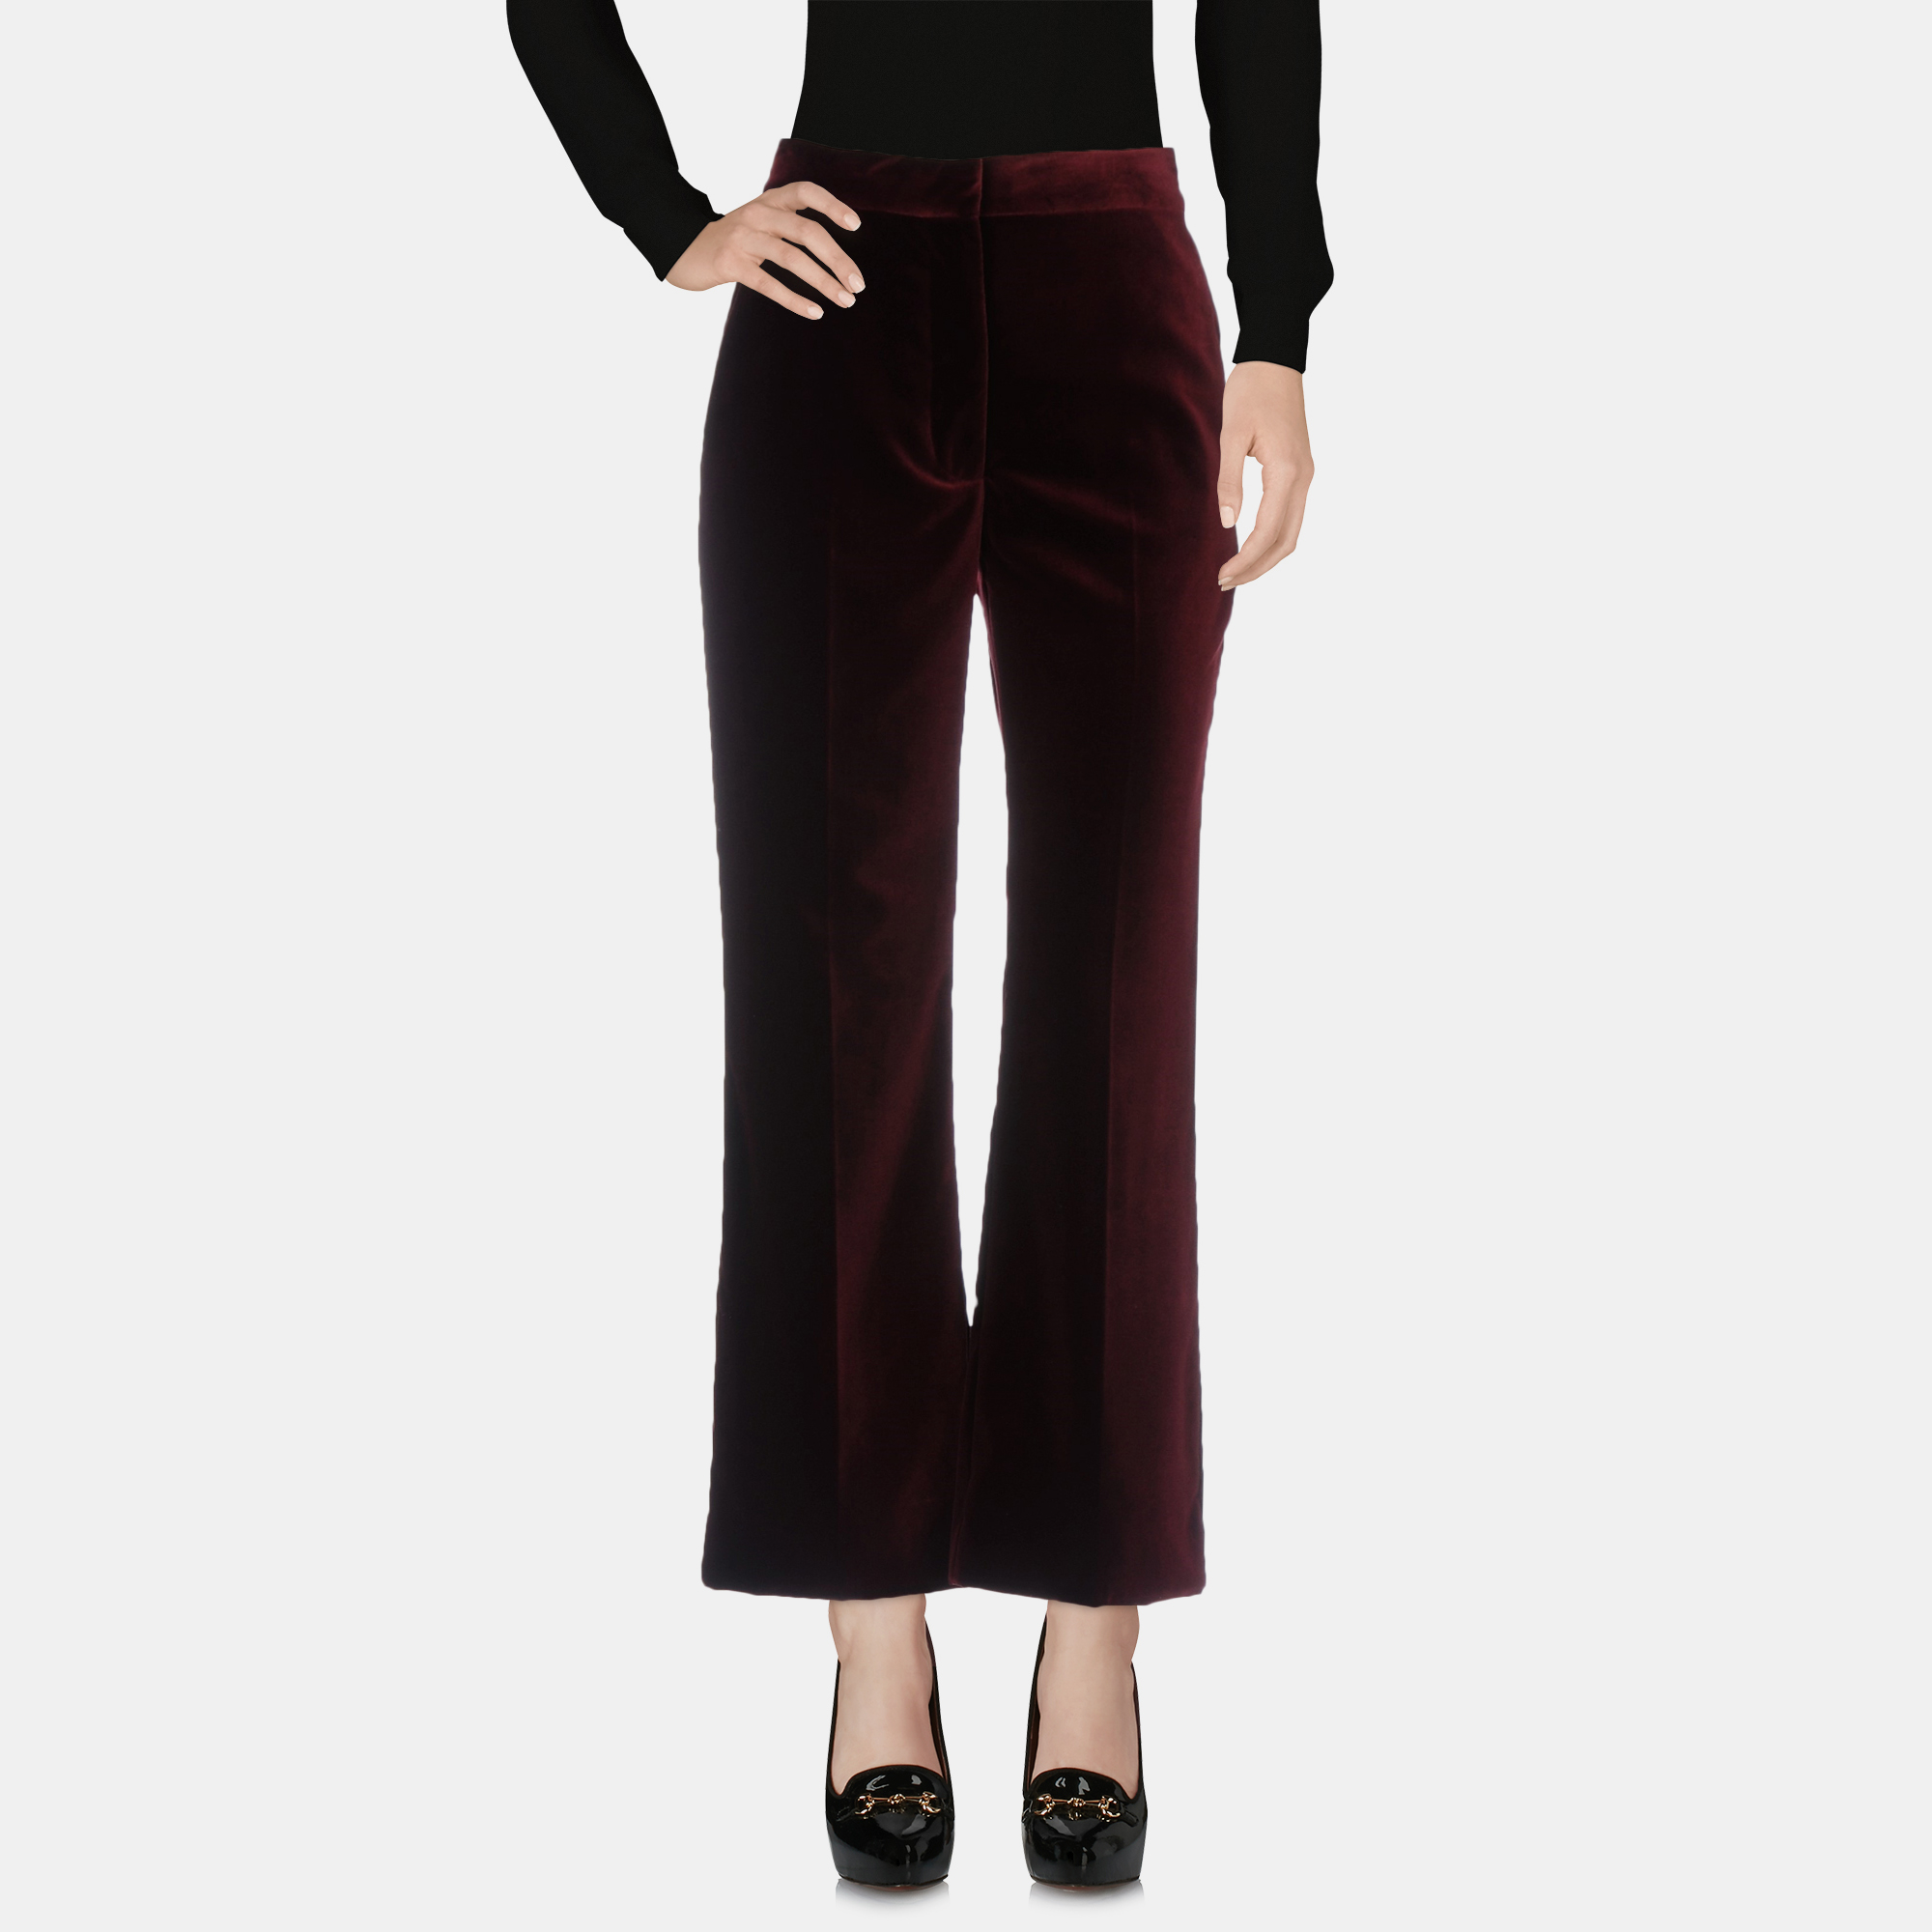 Stella mccartney burgundy velvet pants size 38